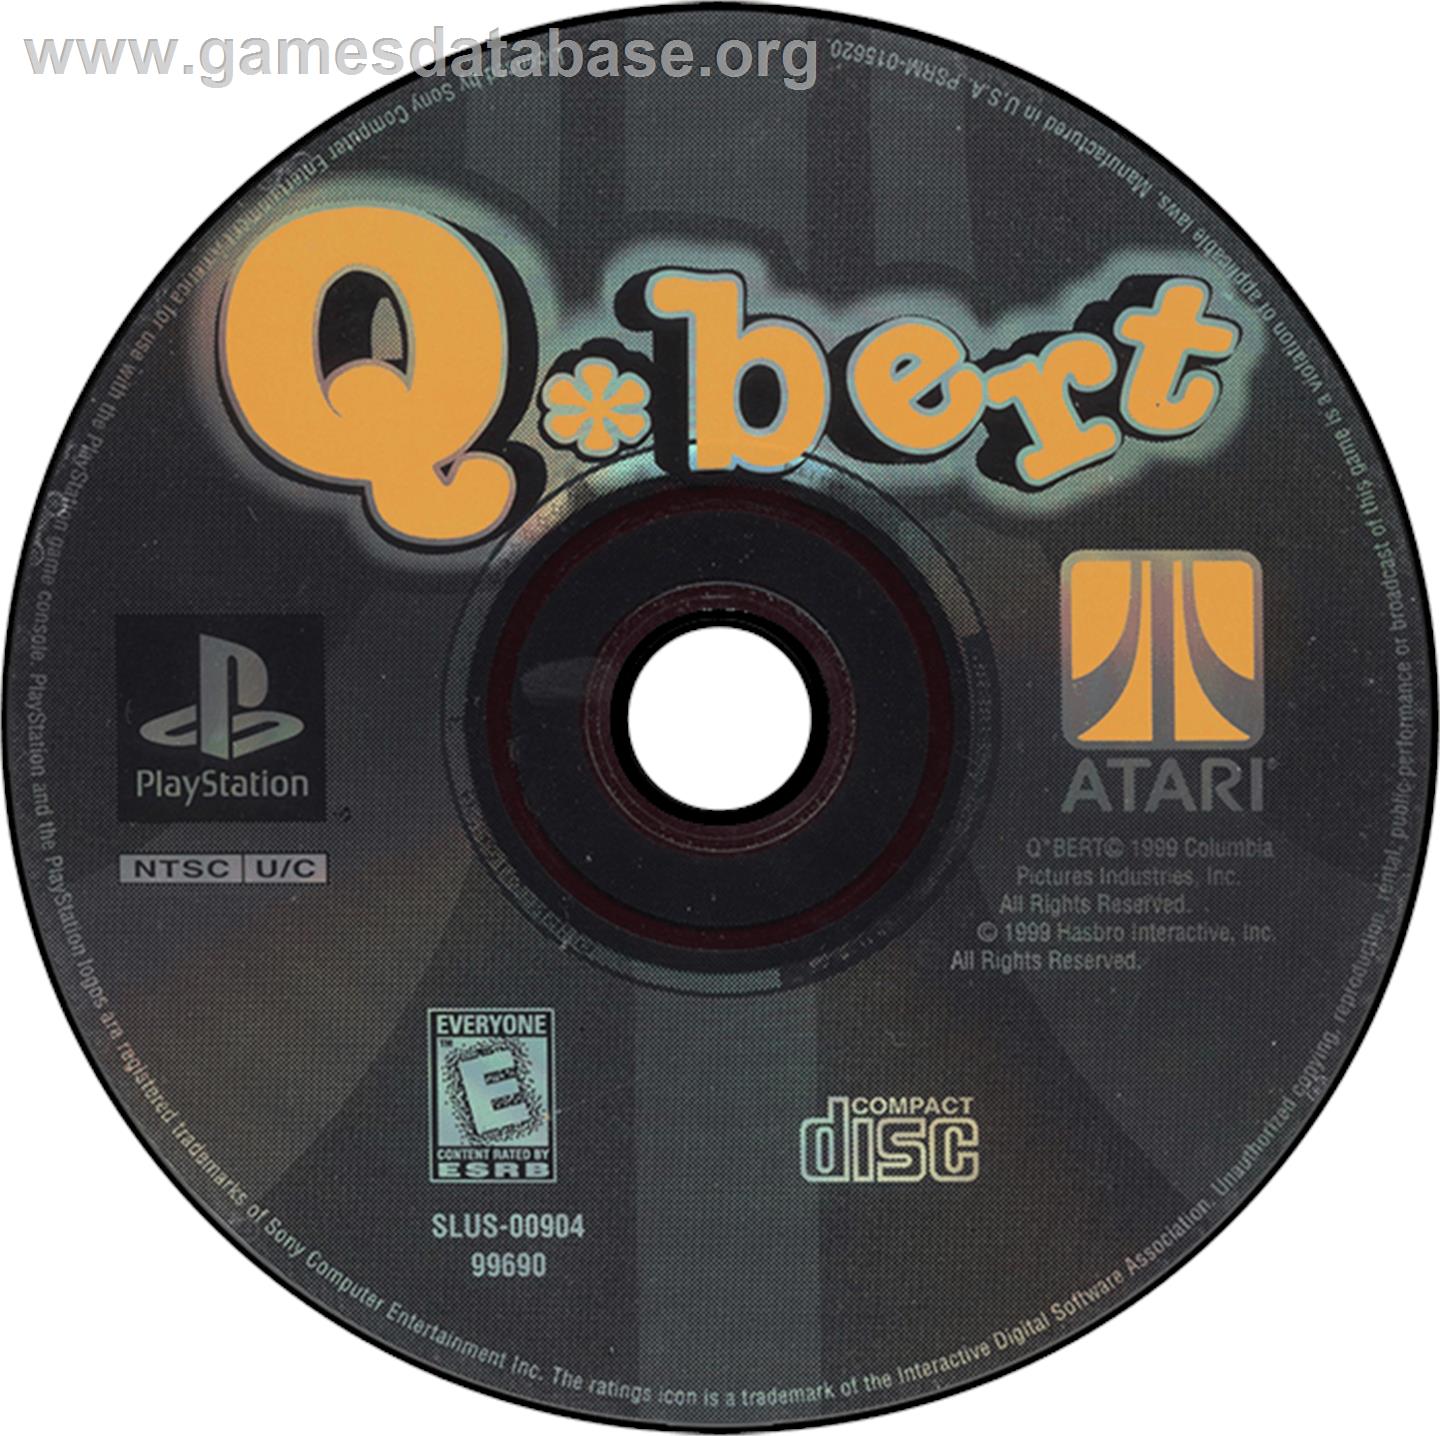 Q*Bert - Sony Playstation - Artwork - Disc